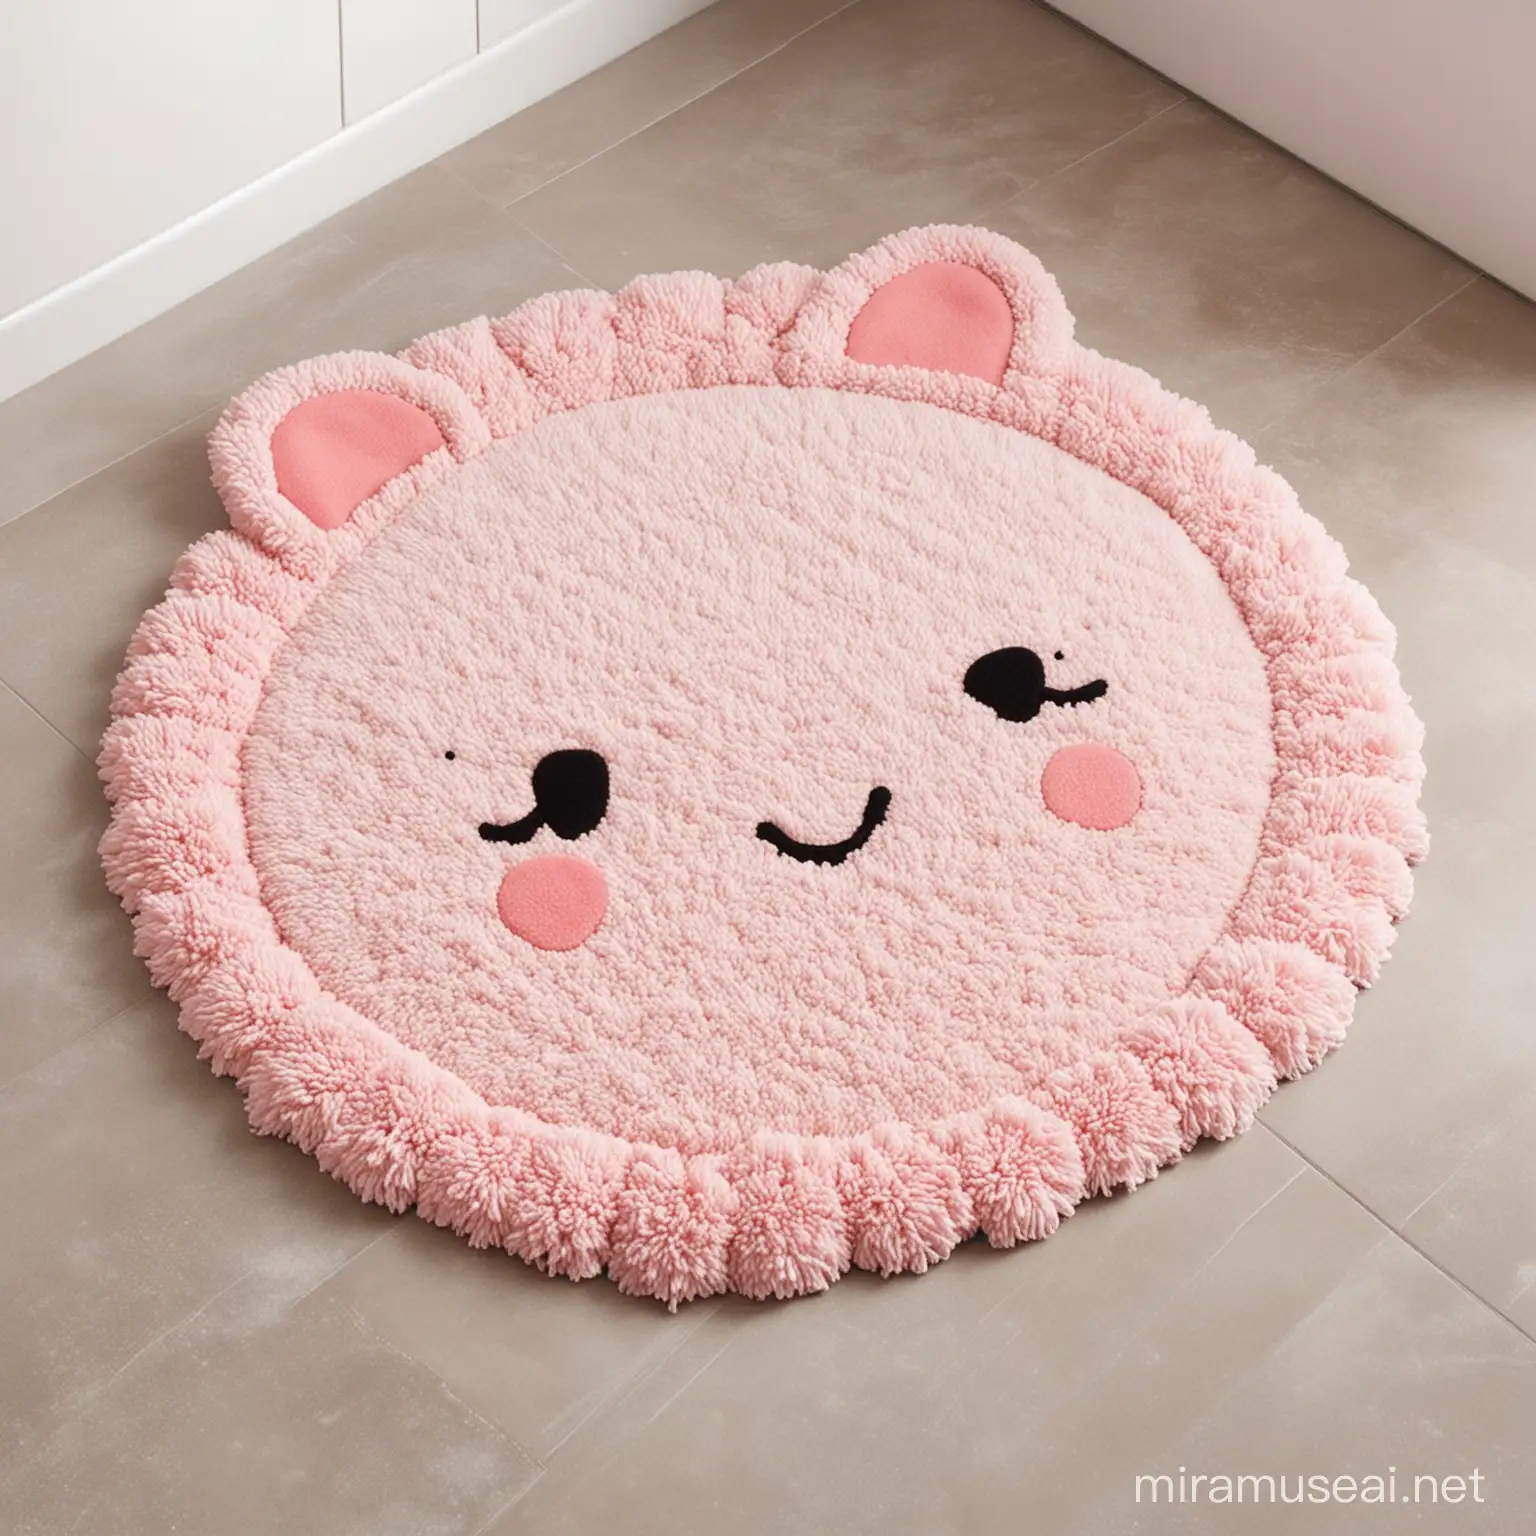 Adorable Animal Bath Mat Design for a Playful Bathroom